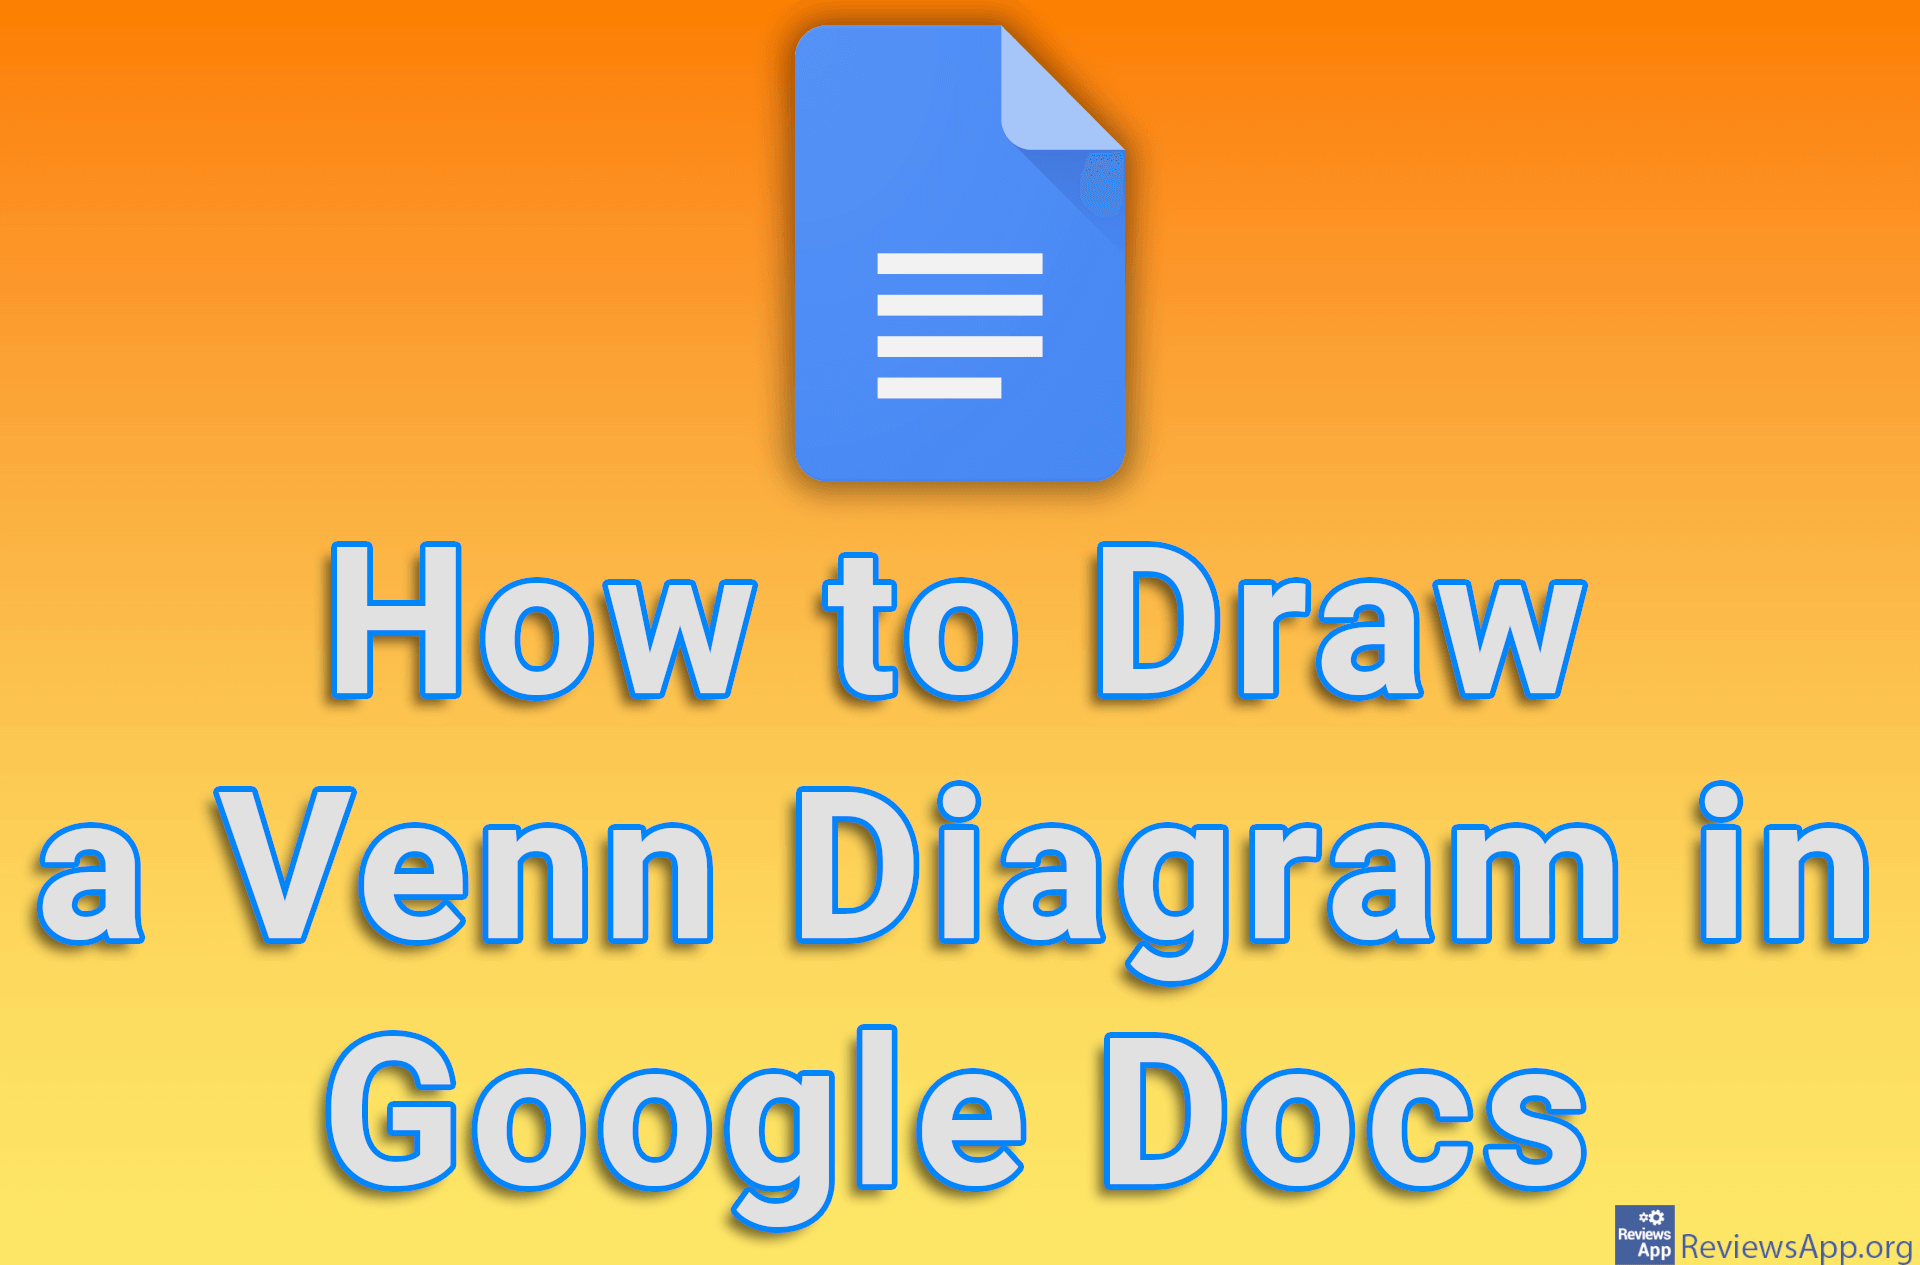 How to Draw a Venn Diagram in Google Docs